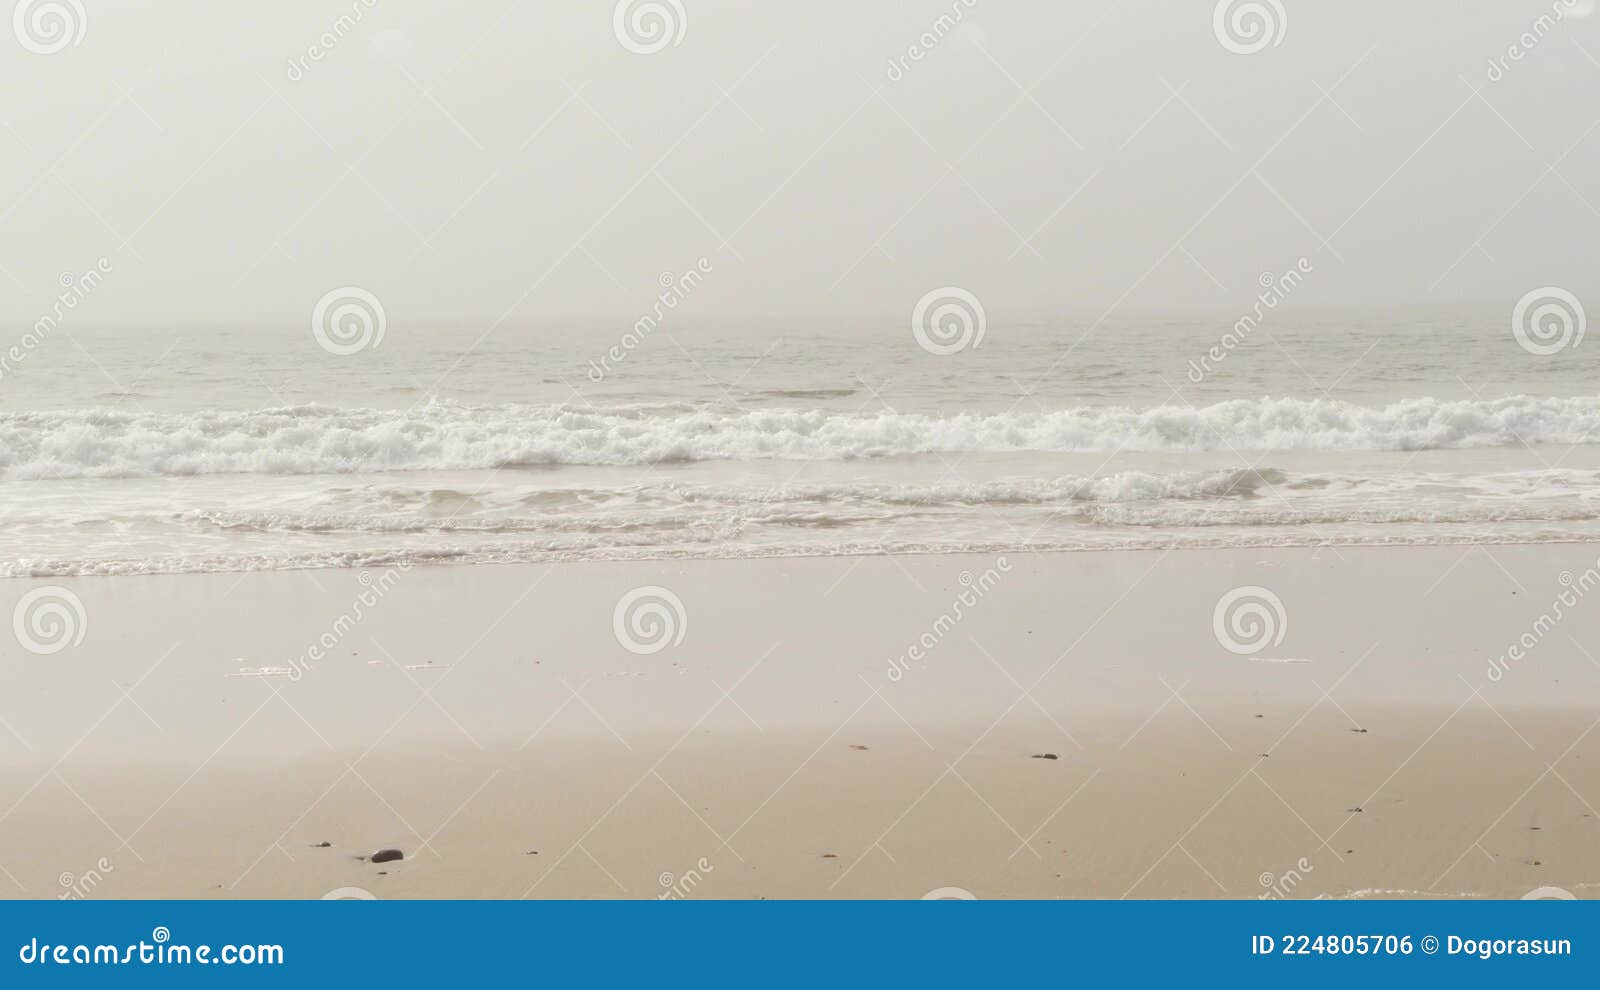 sandy misty beach california usa. pacific ocean coast, dense fog on sea shore. waves in brume haze.